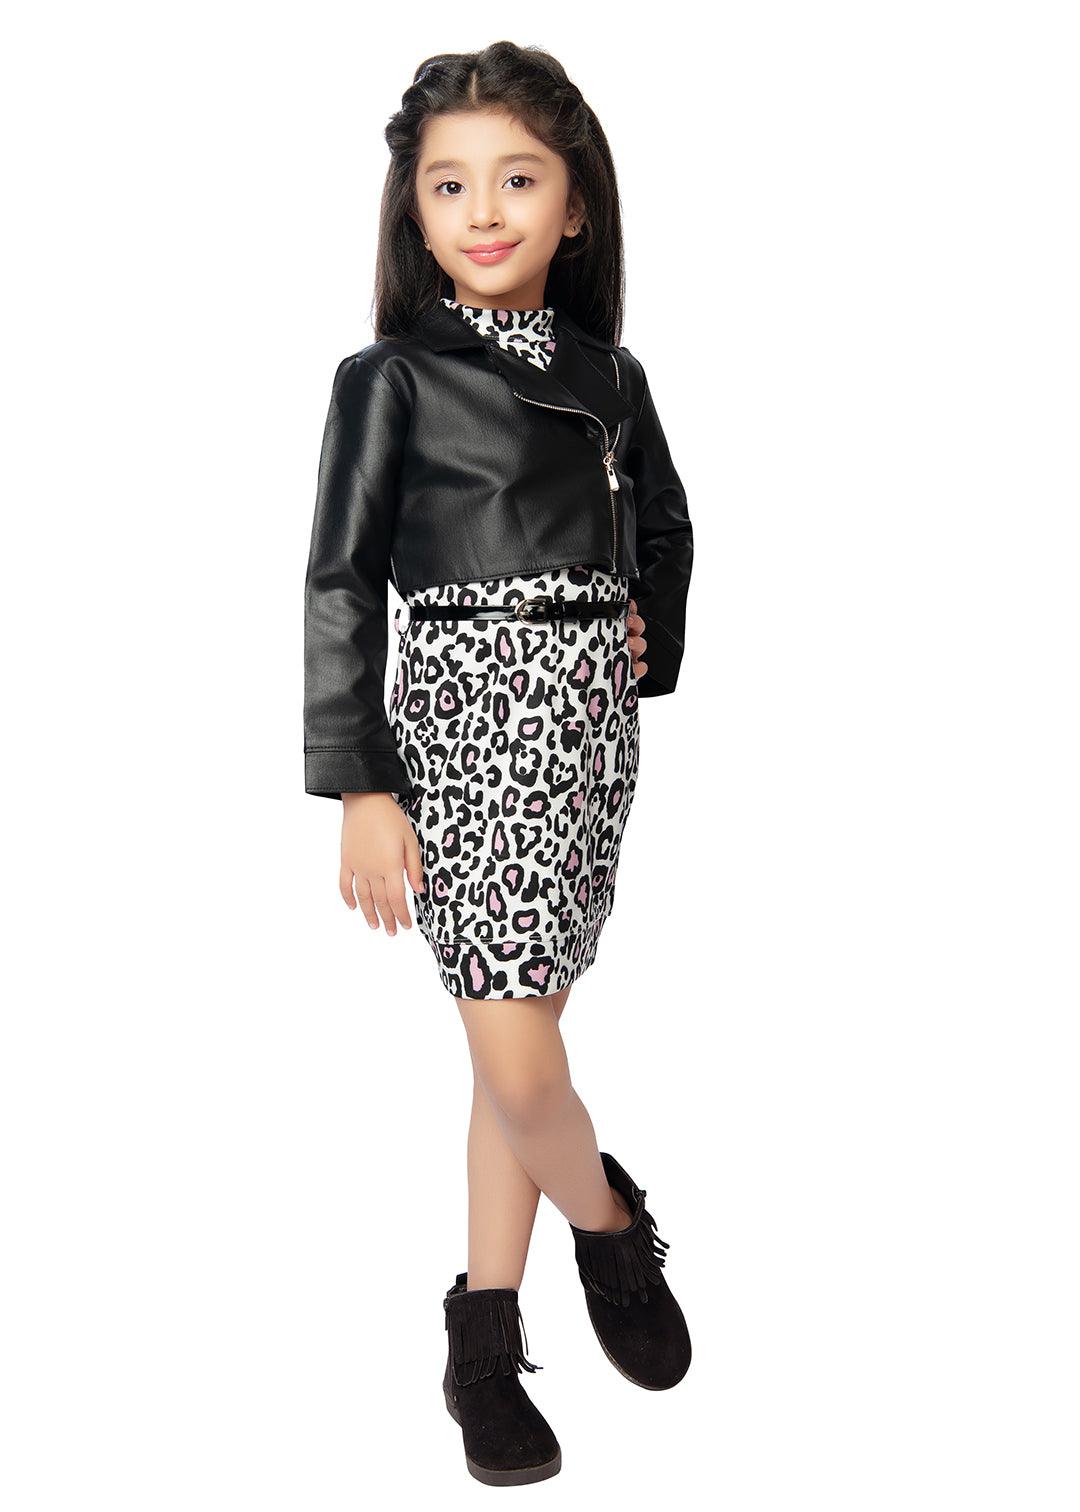 Tiny Baby Cheetah Pattern Black Colored Dress - 2125 Black - TINY BABY INDIA shop.tinybaby.in